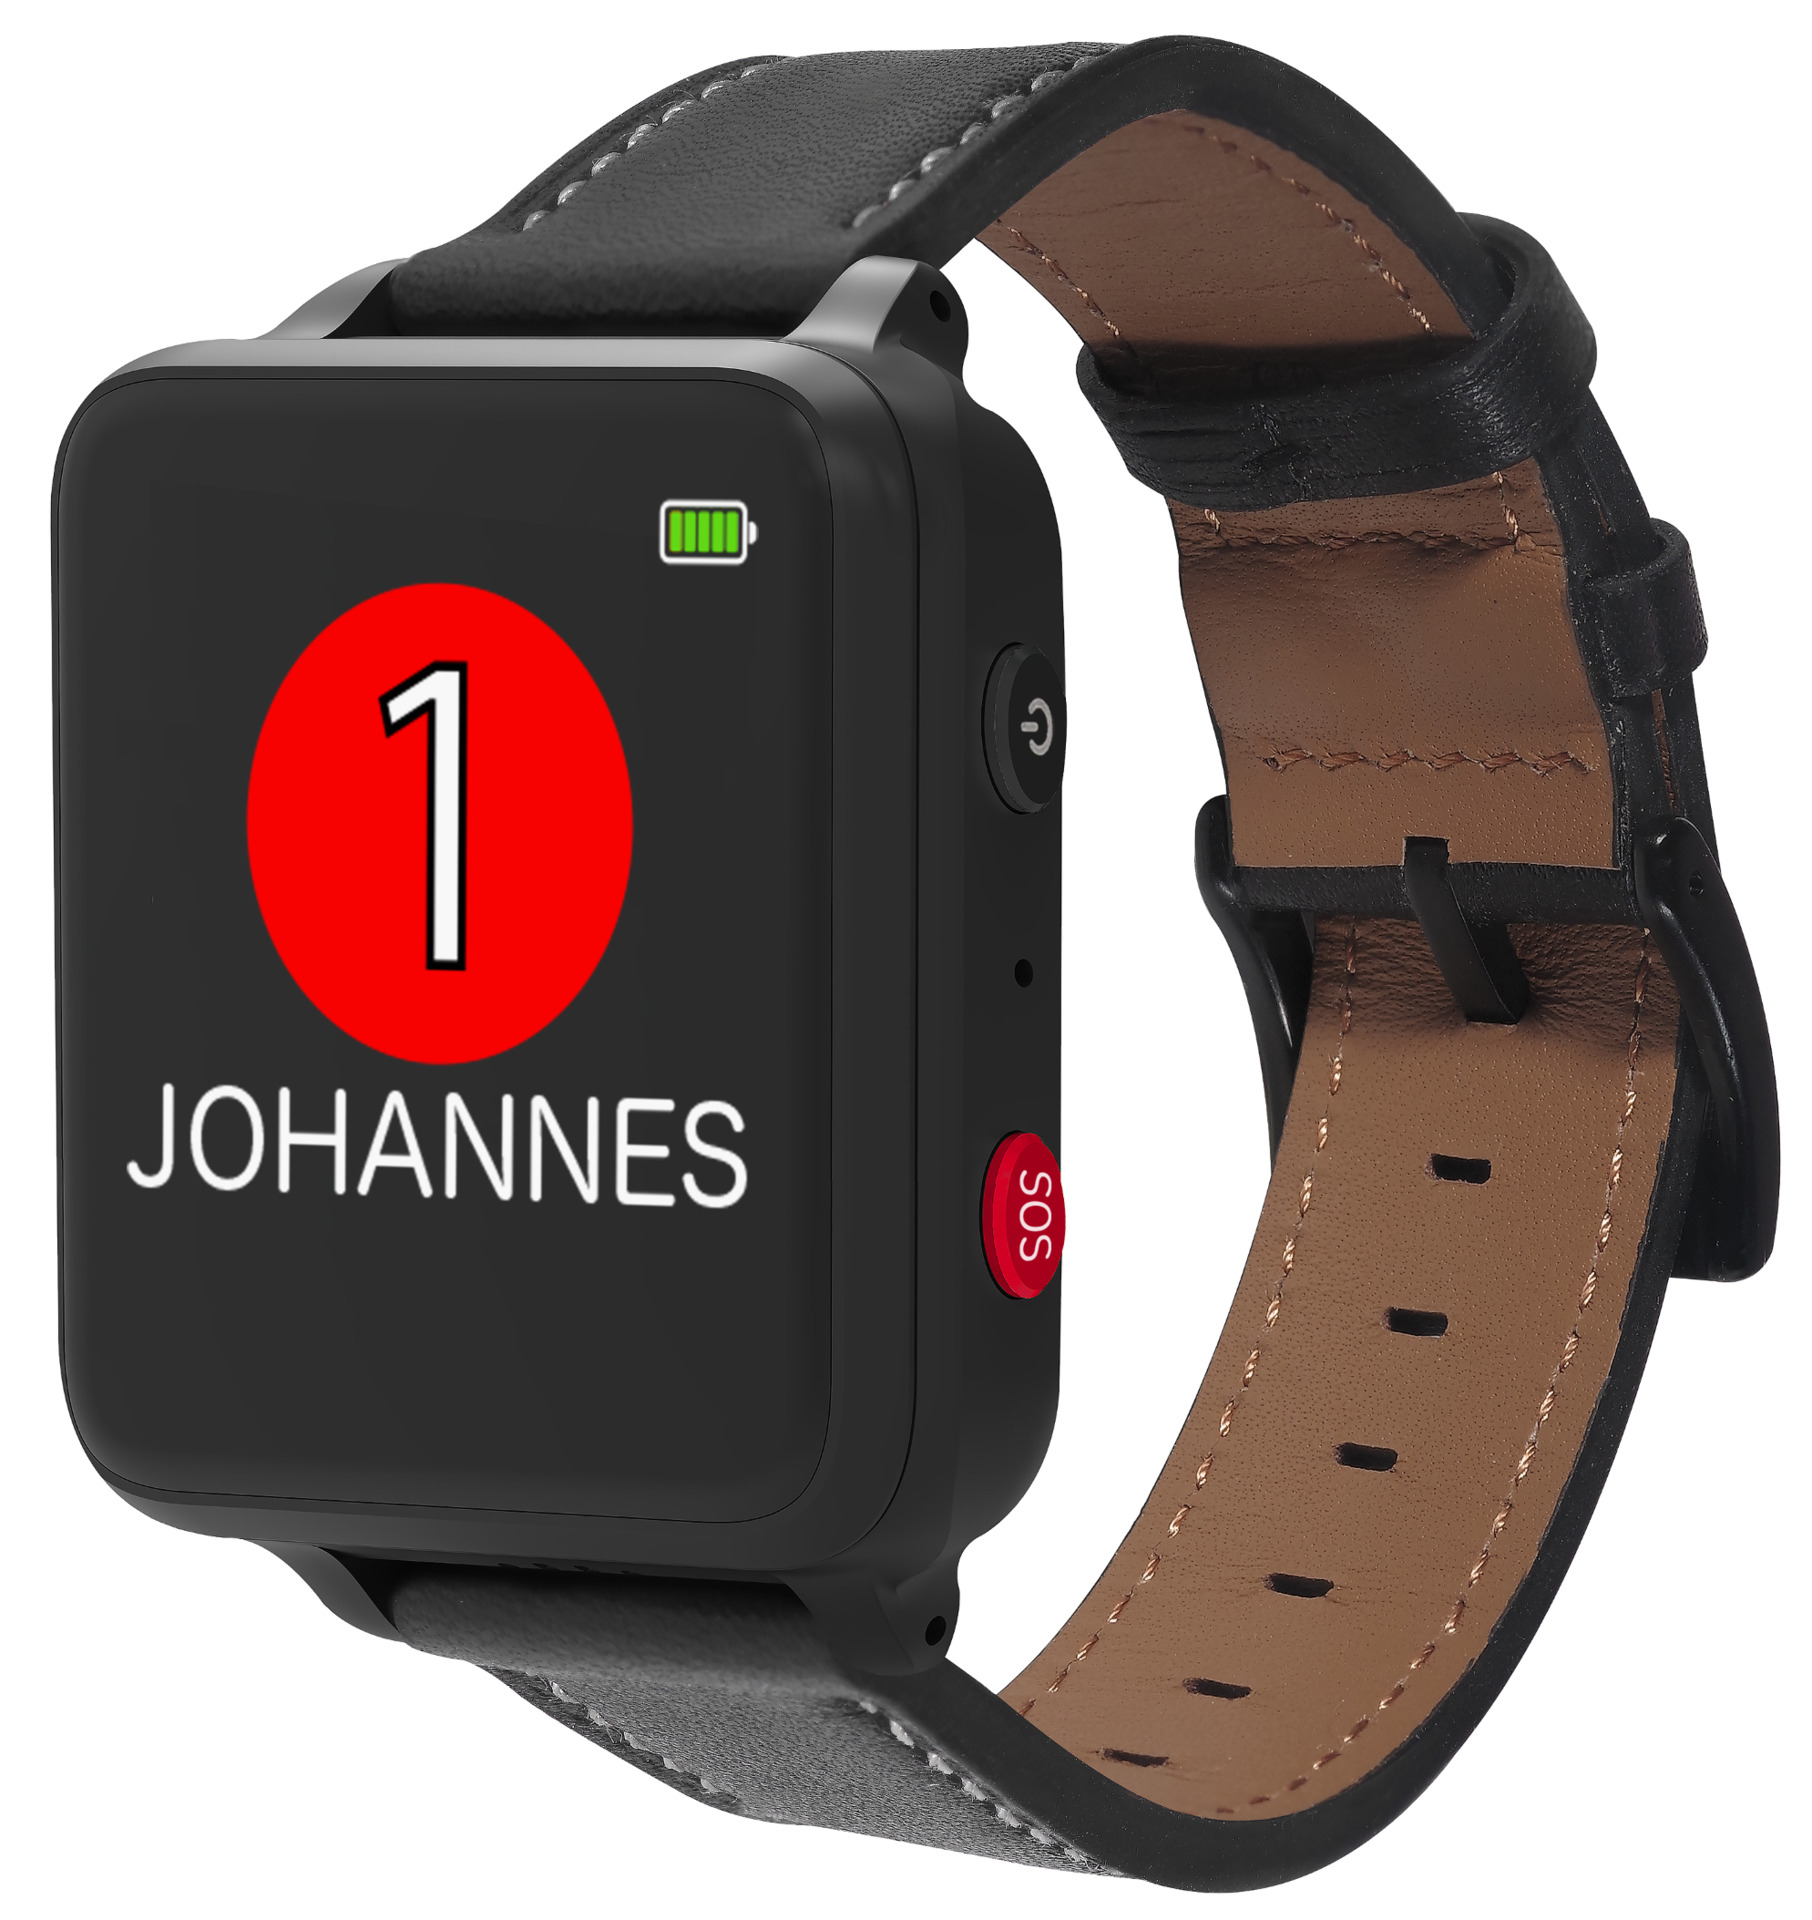 ANIO Care + Smartwatch schwarz Leder